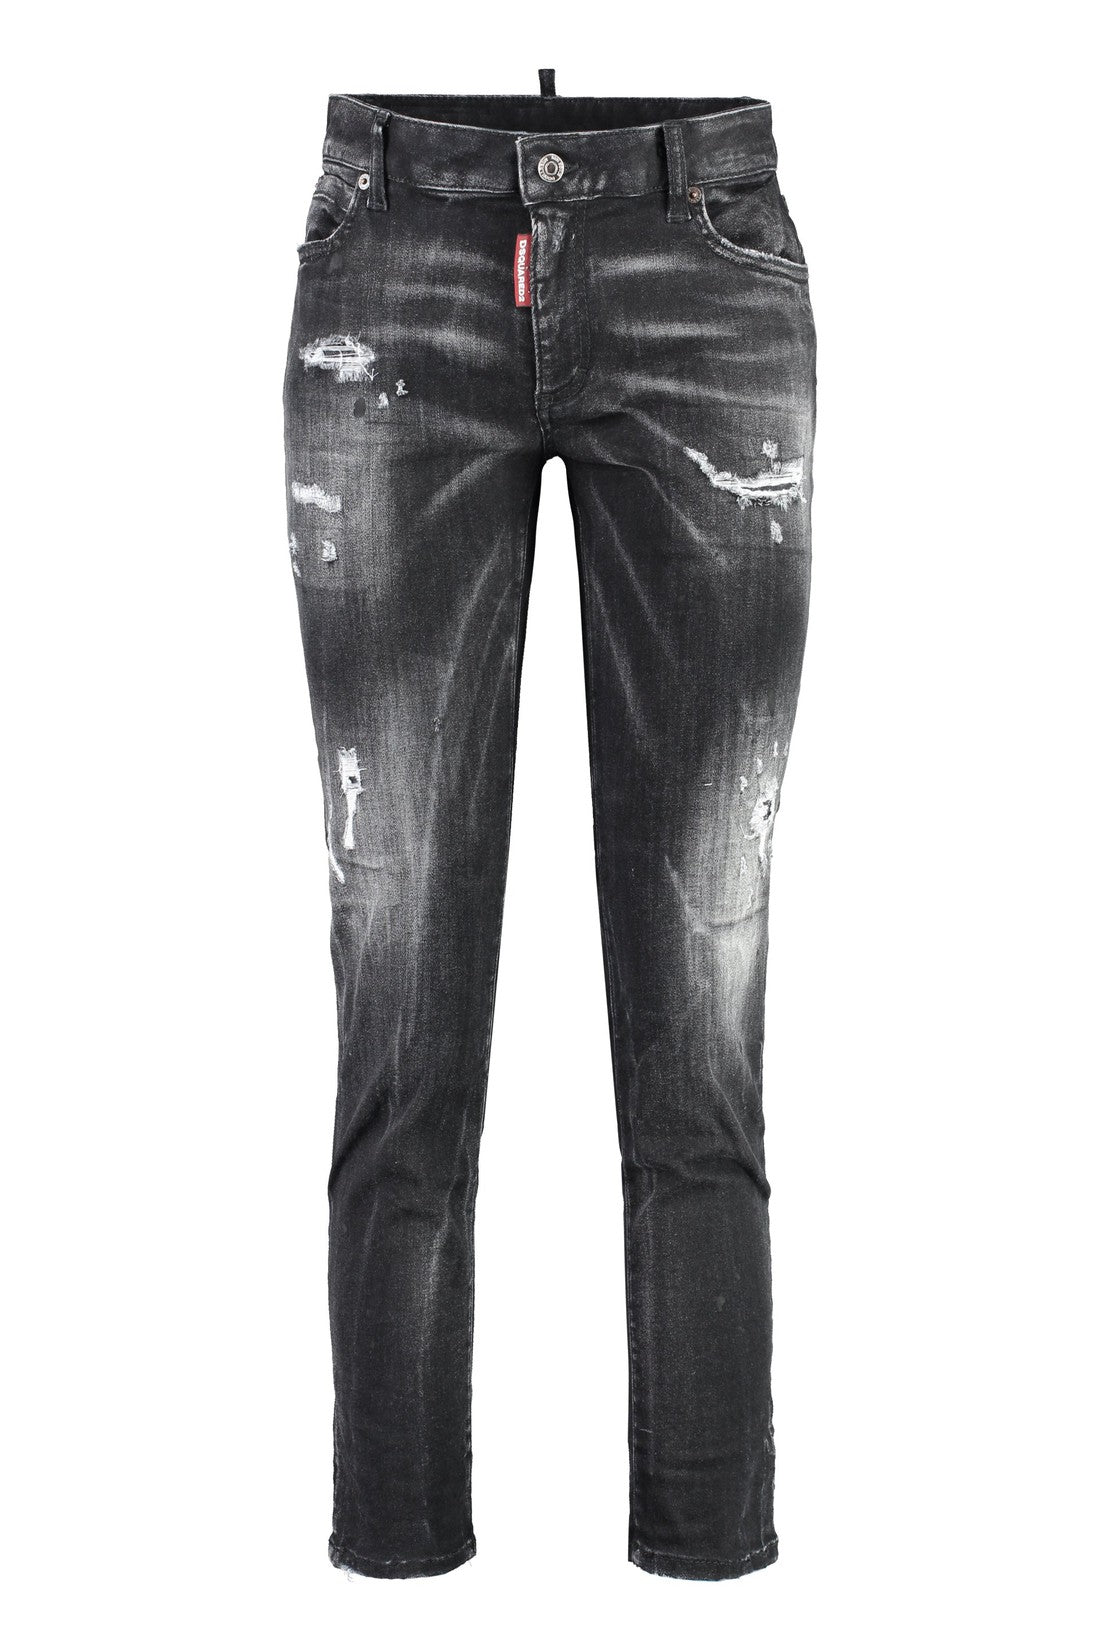 Dsquared2-OUTLET-SALE-Twiggy stretch cotton cropped jeans-ARCHIVIST